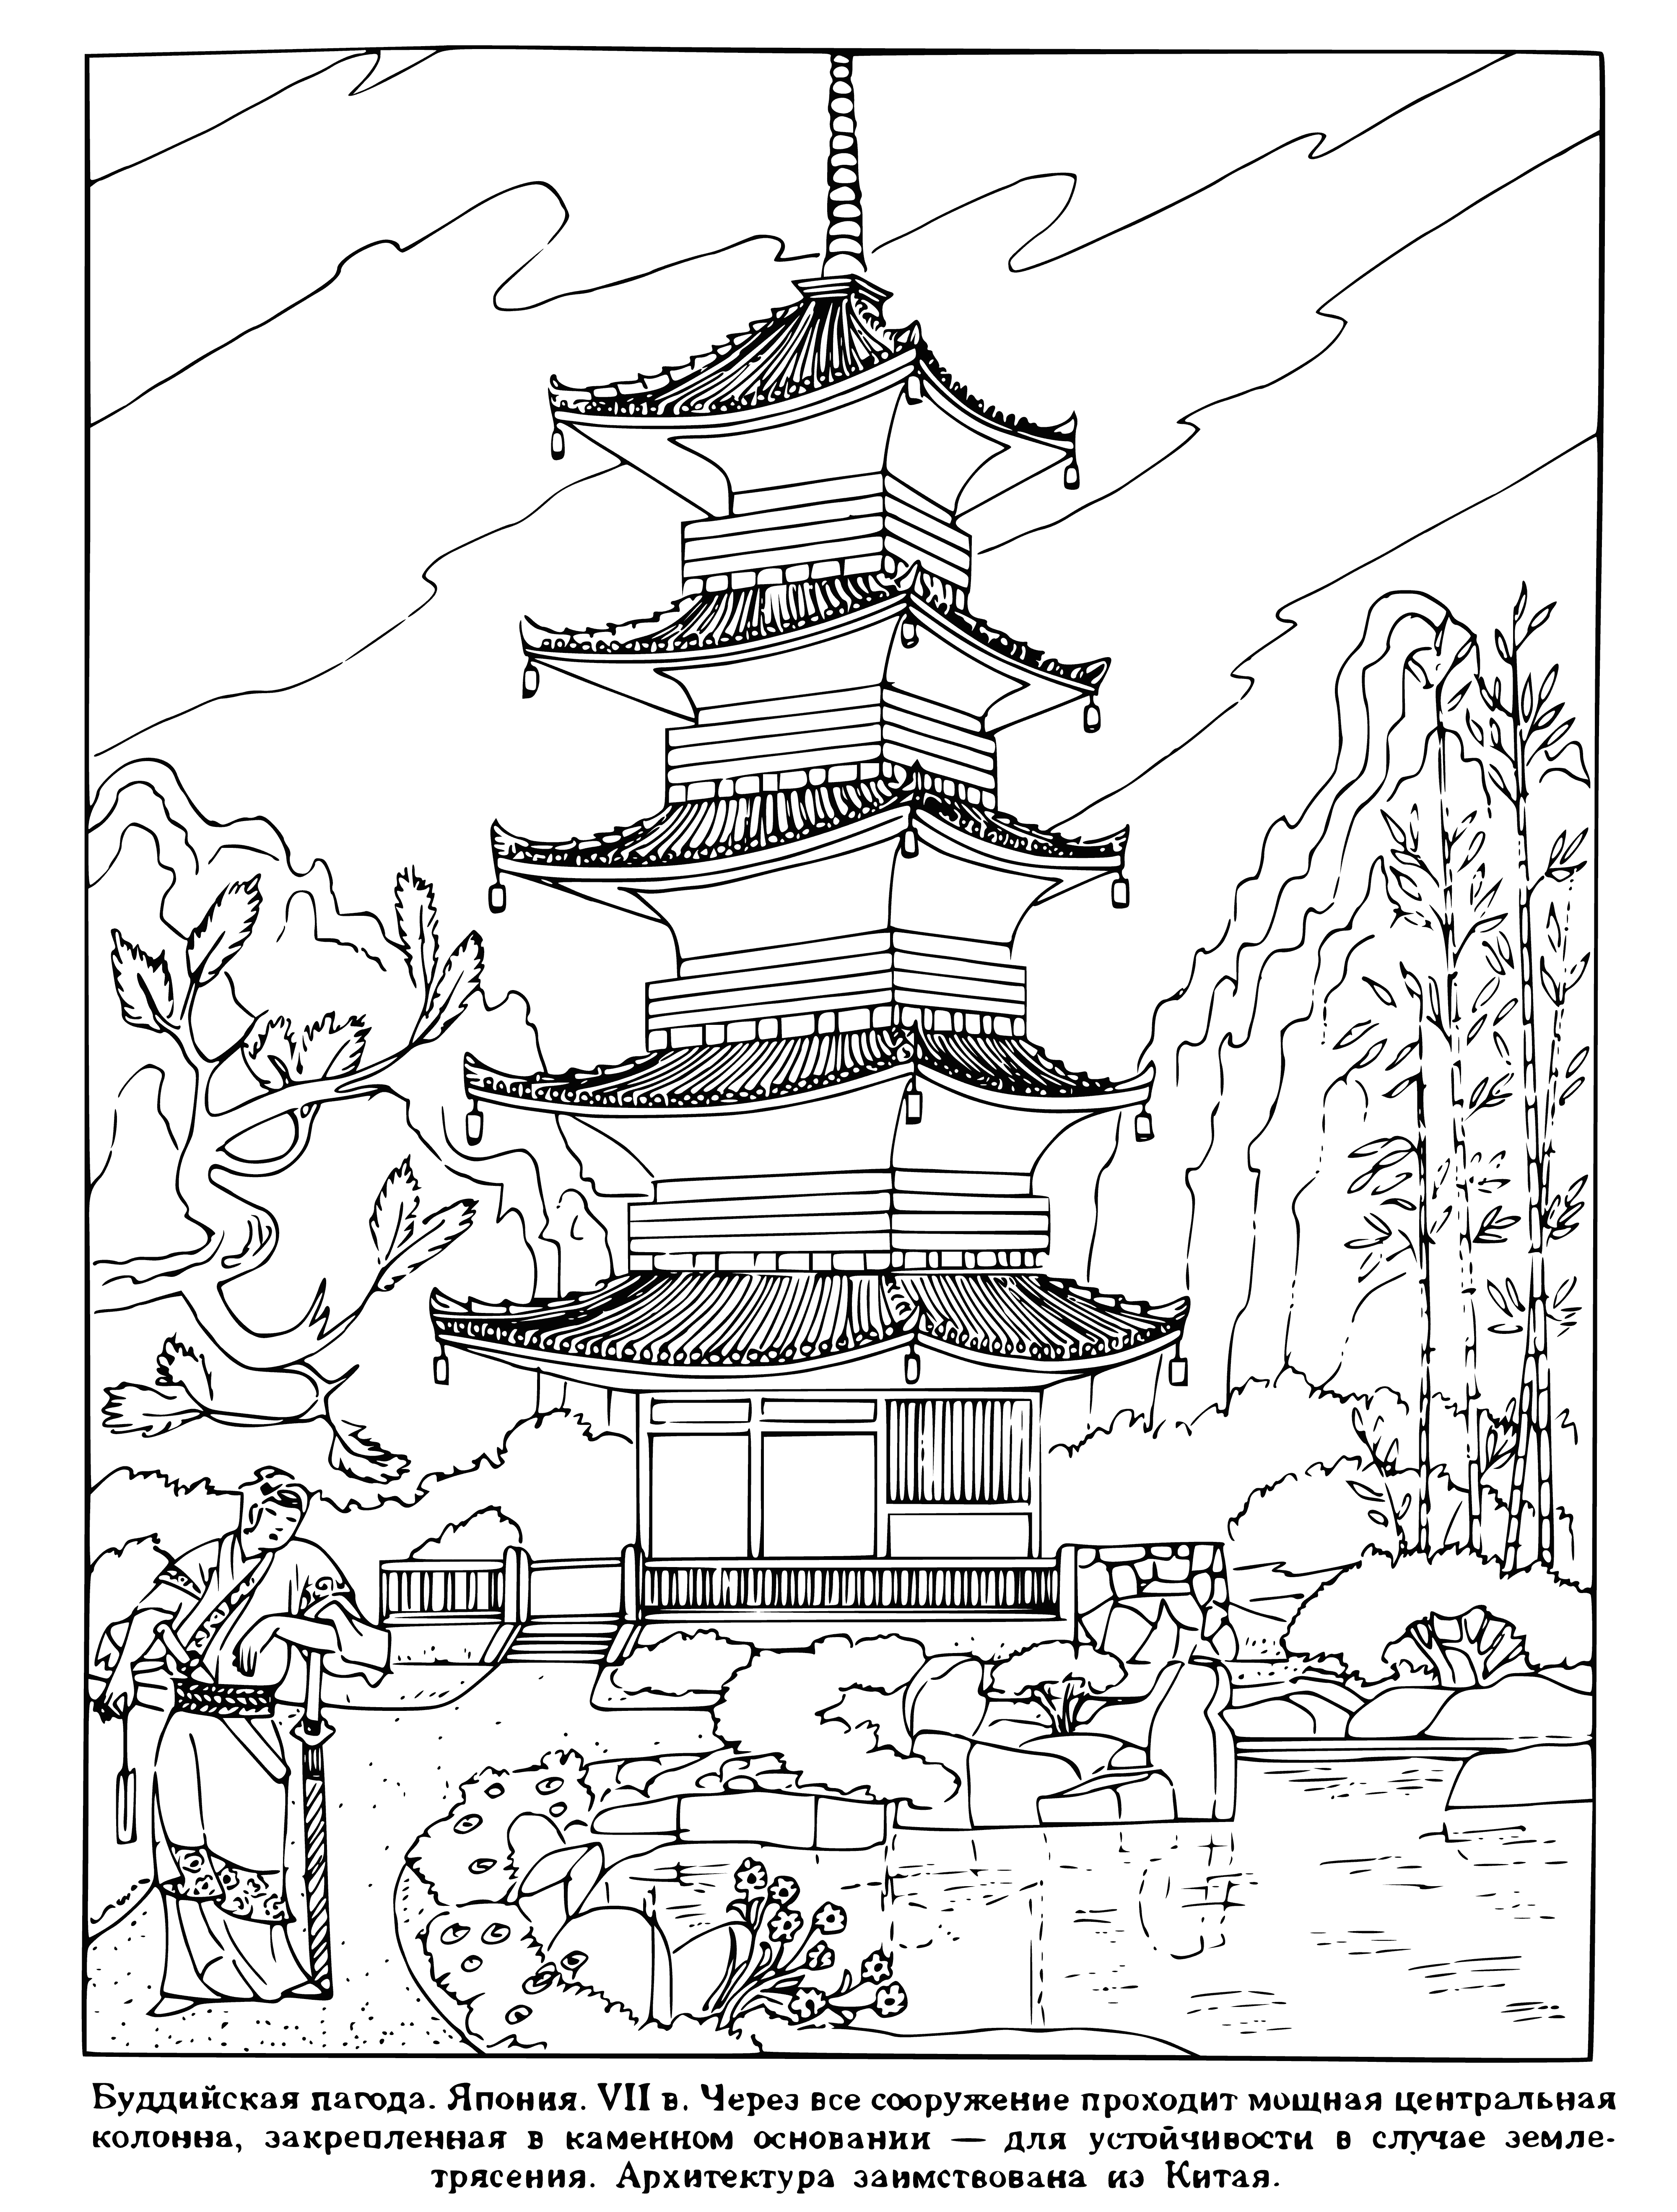 Budist pagoda boyama sayfası